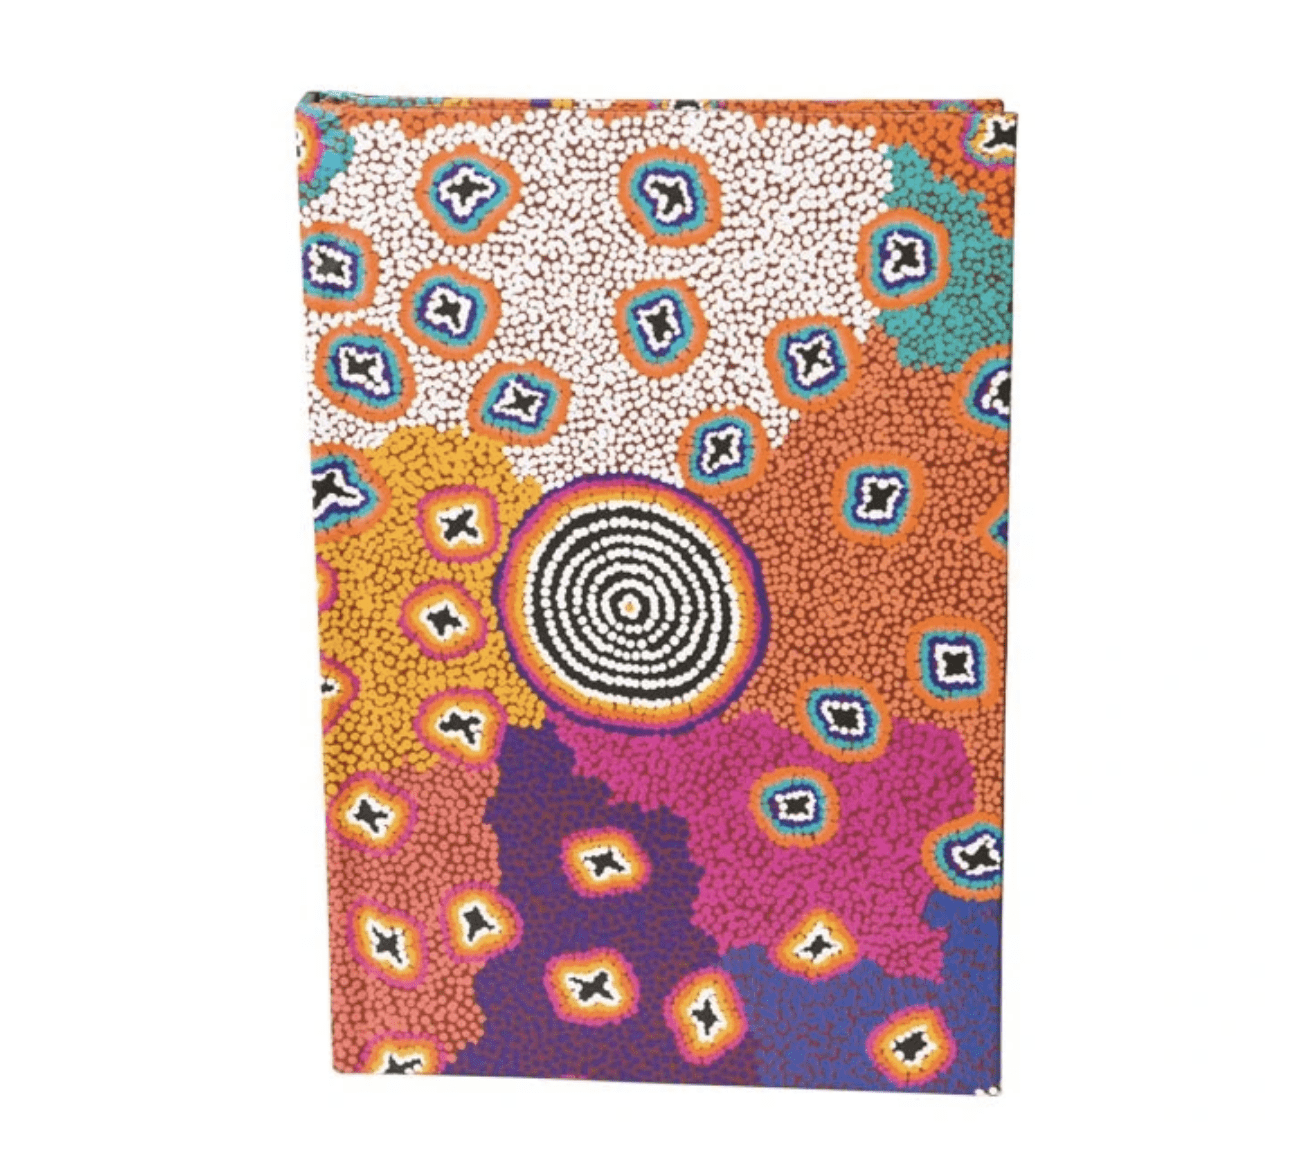 Ruth Stewart – Aboriginal Writing Journal